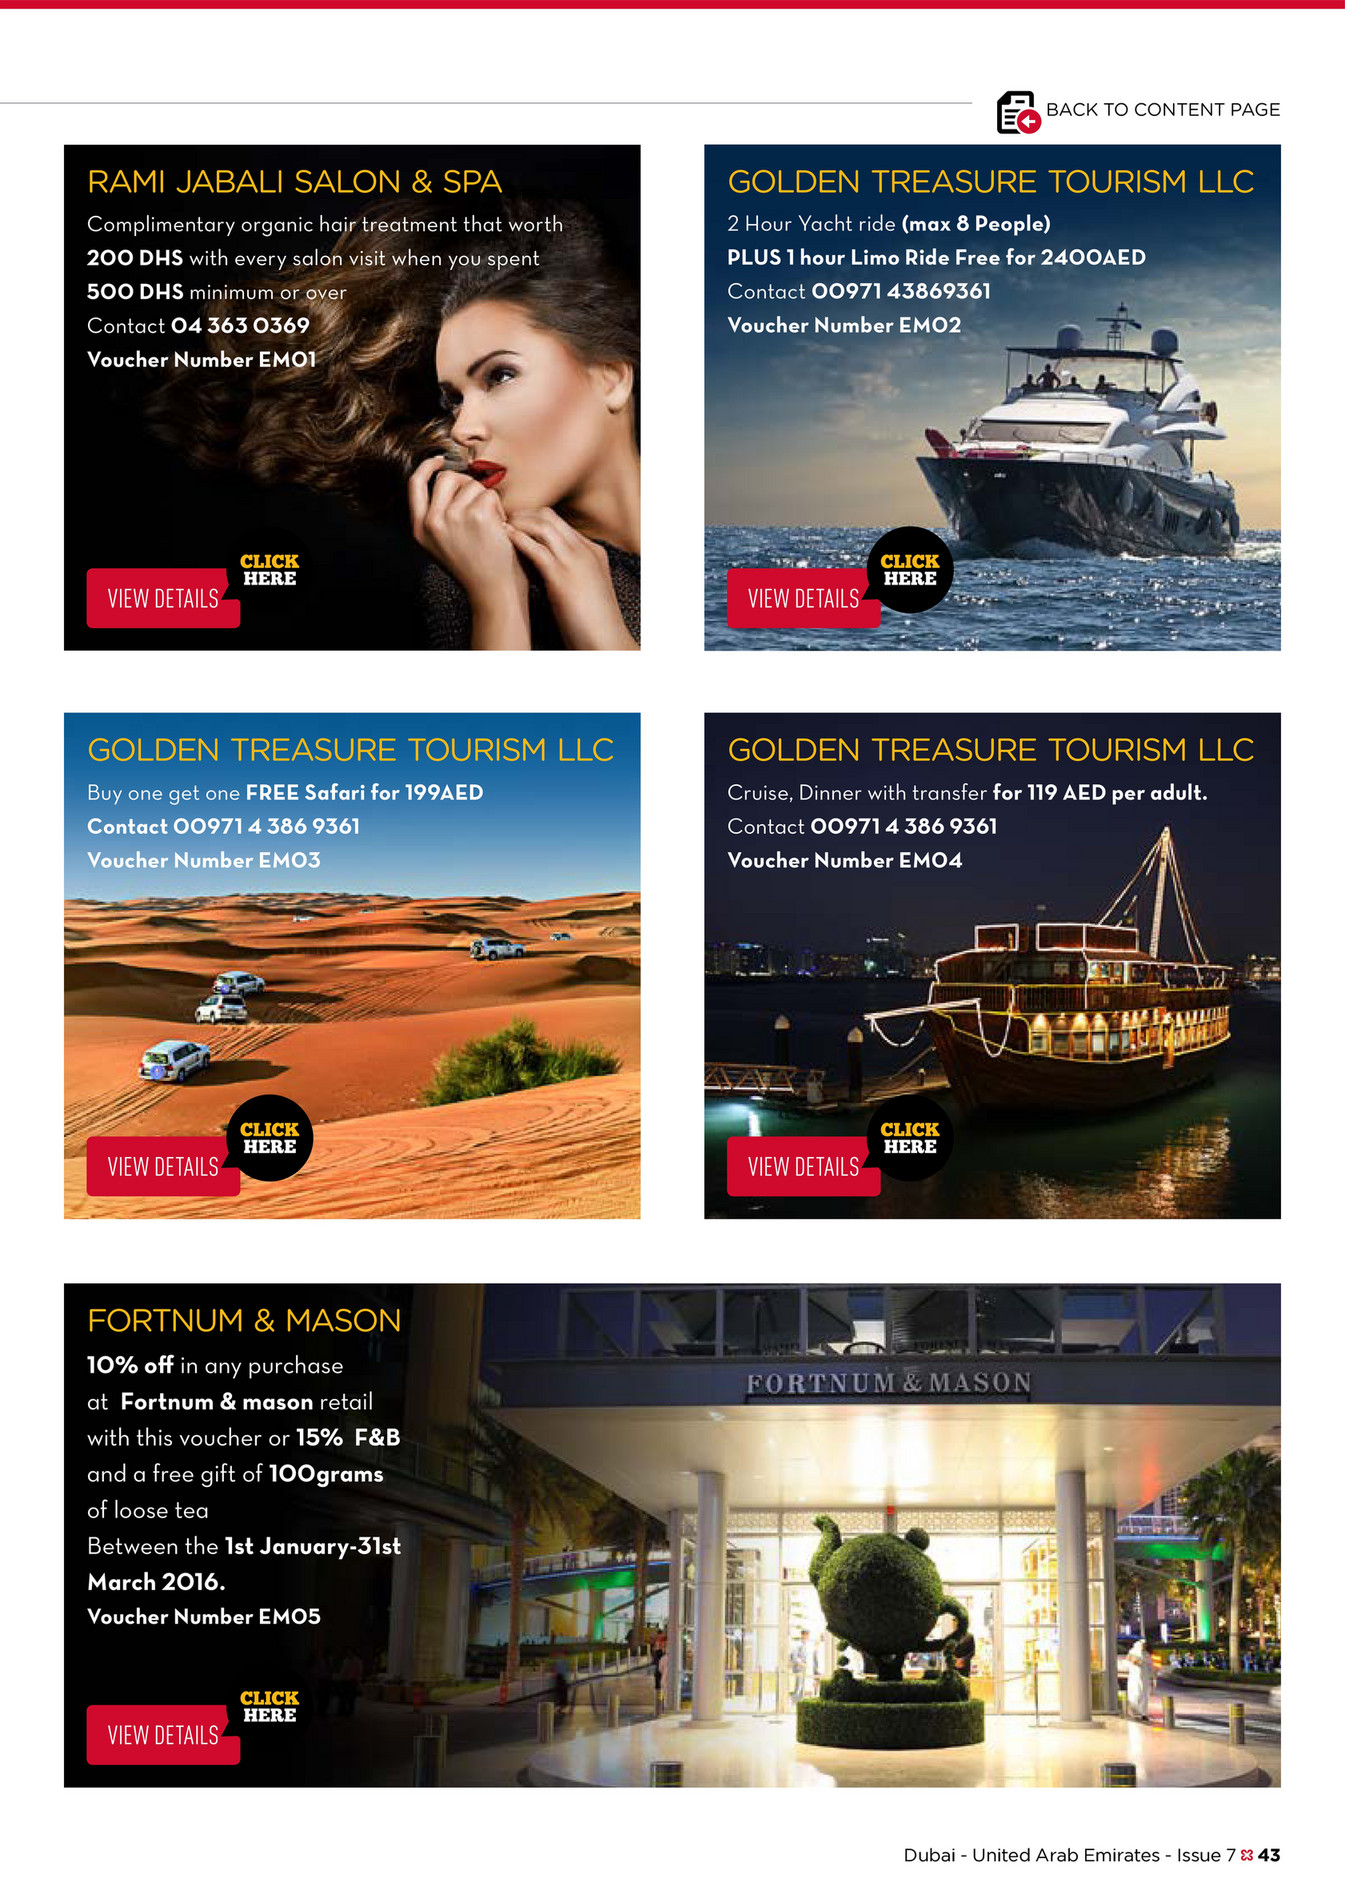 Expatmoney Expatlife Creative Zone Issue 7 Dubai Golden Treasure Tourism Offer Created With Publitas Com